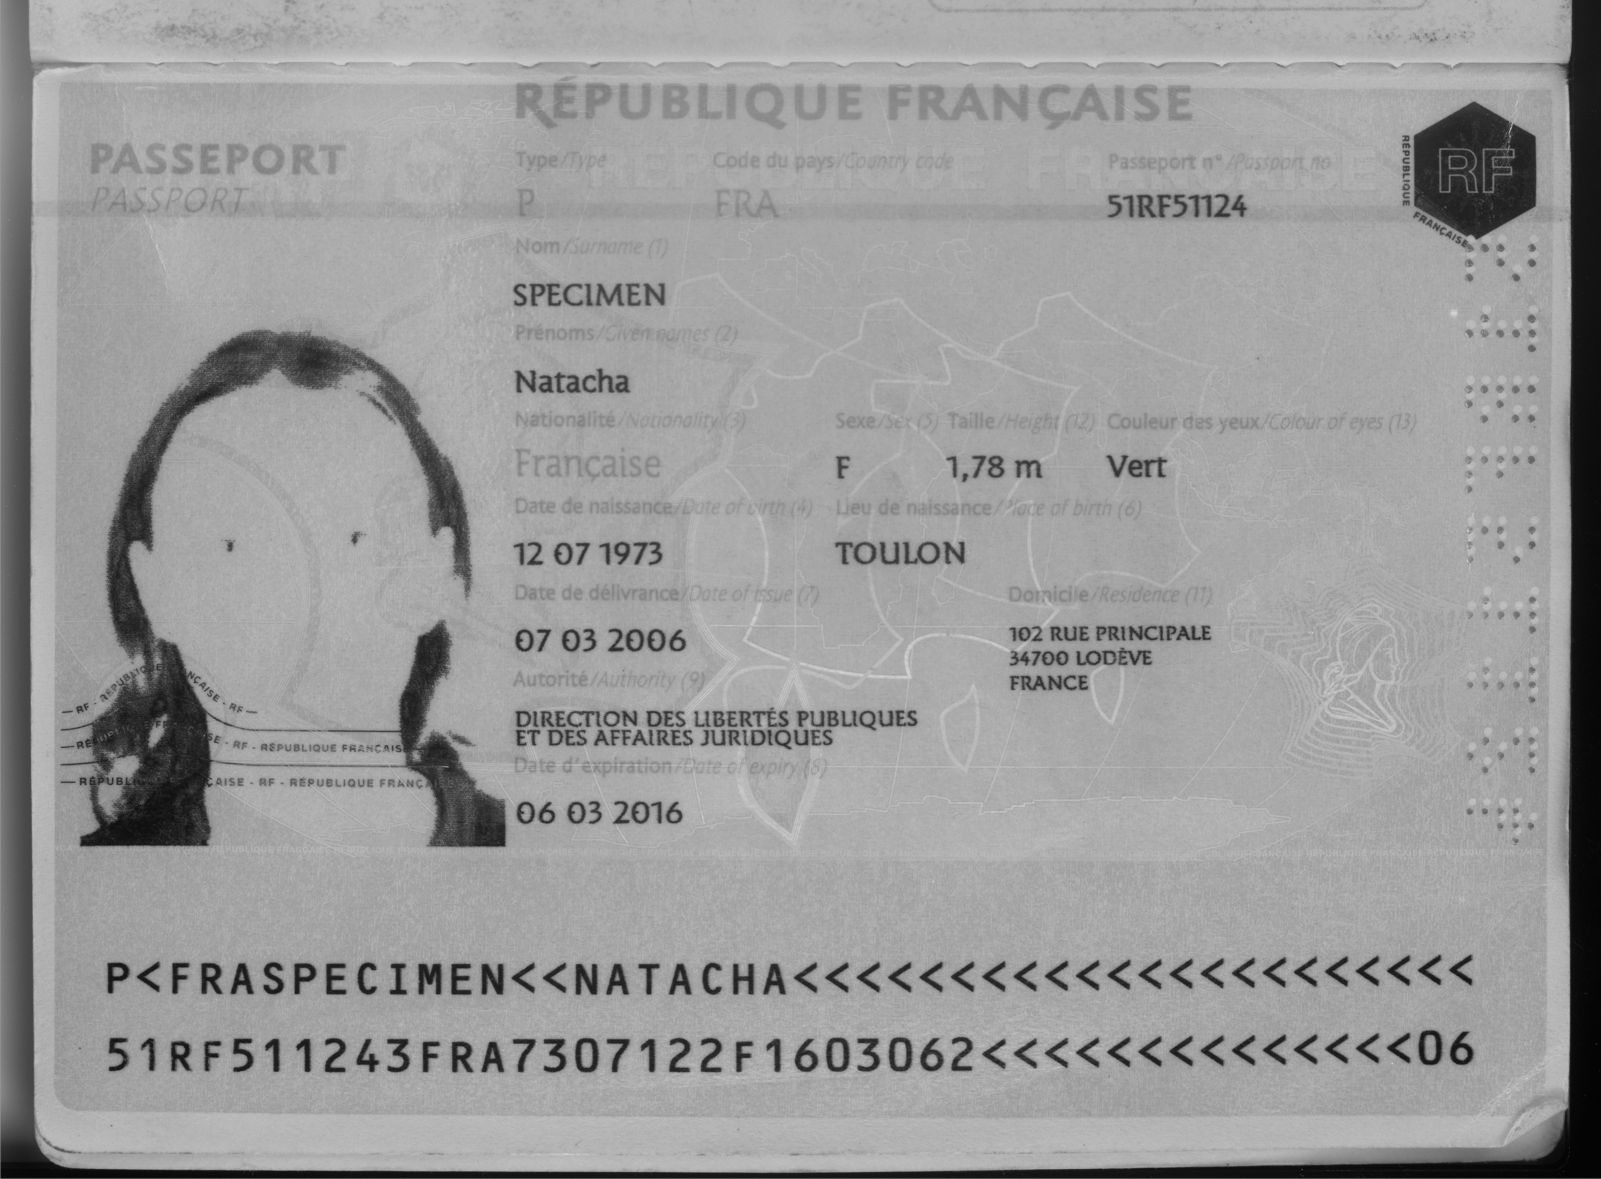 PDi Passport Diffused IR 2